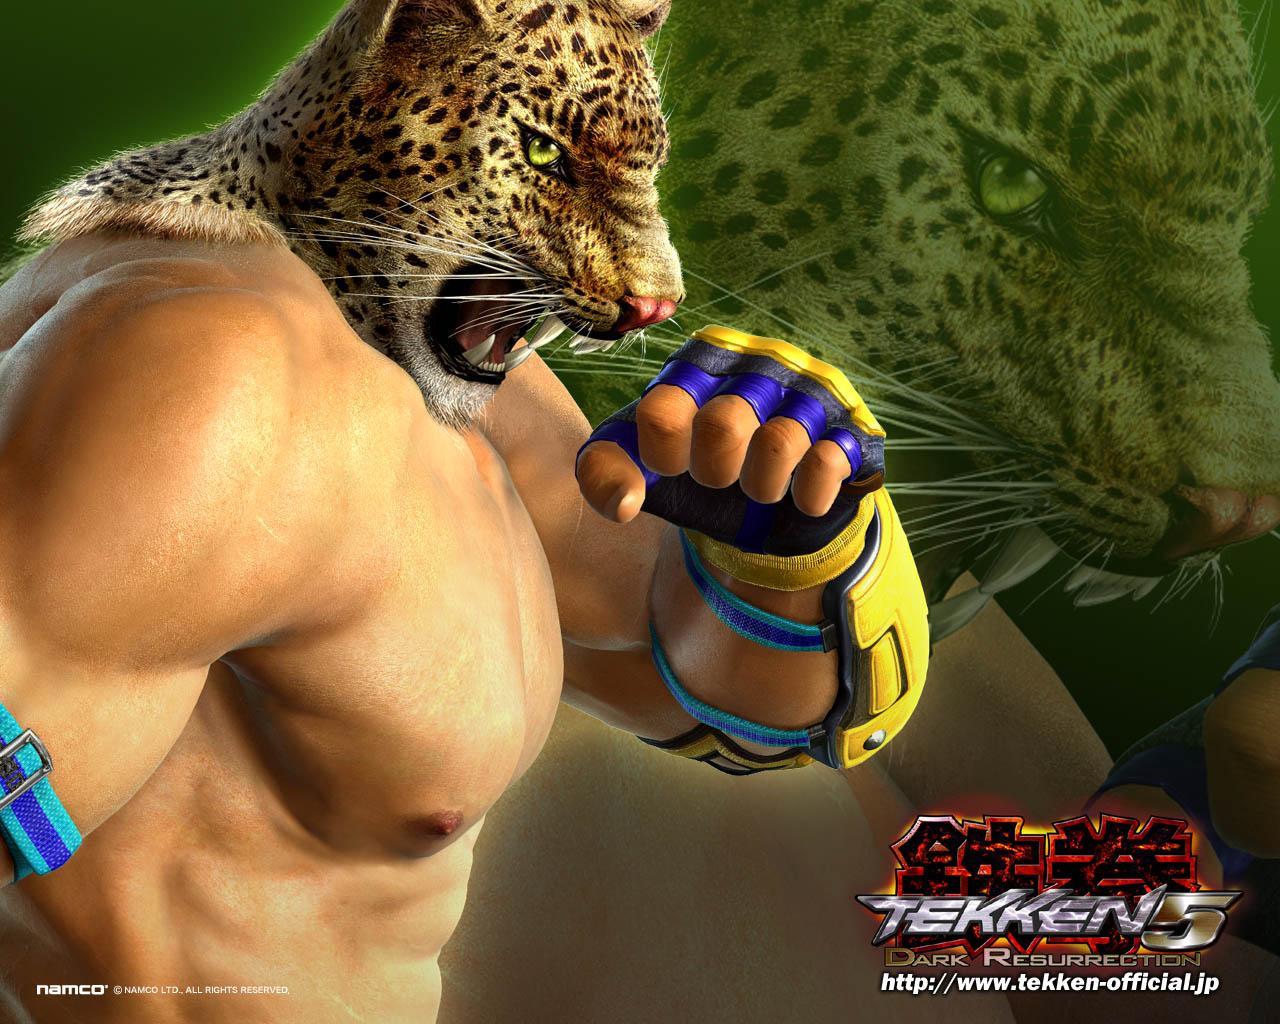 Free Images games Tekken